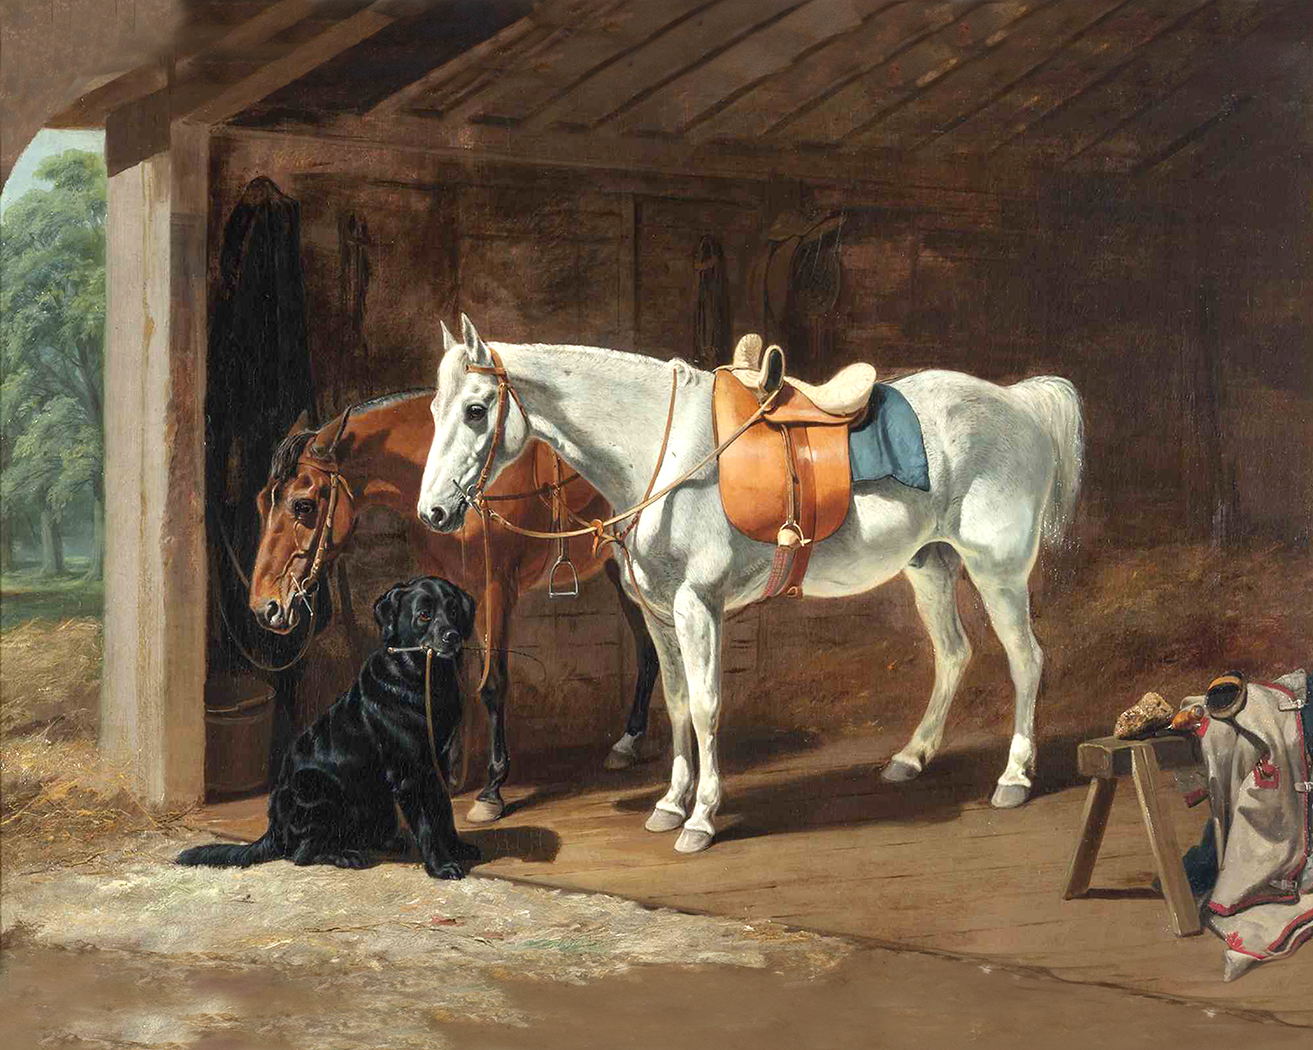 Equestrian/Fox Equestrian Labrador and Horses Framed Oil Paintin ...